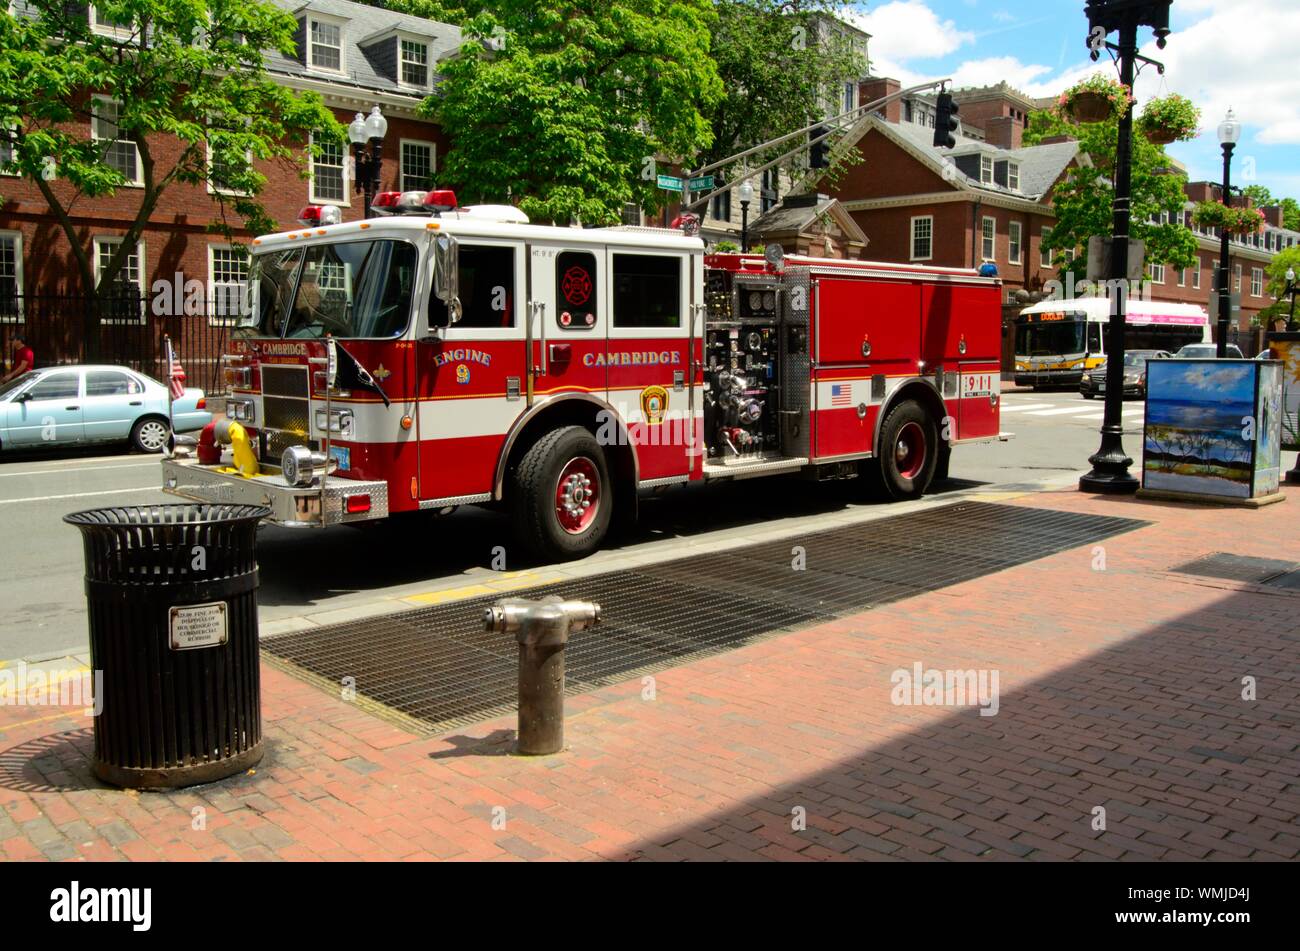 Fire engine in Cambridge Massachusetts Stock Photo